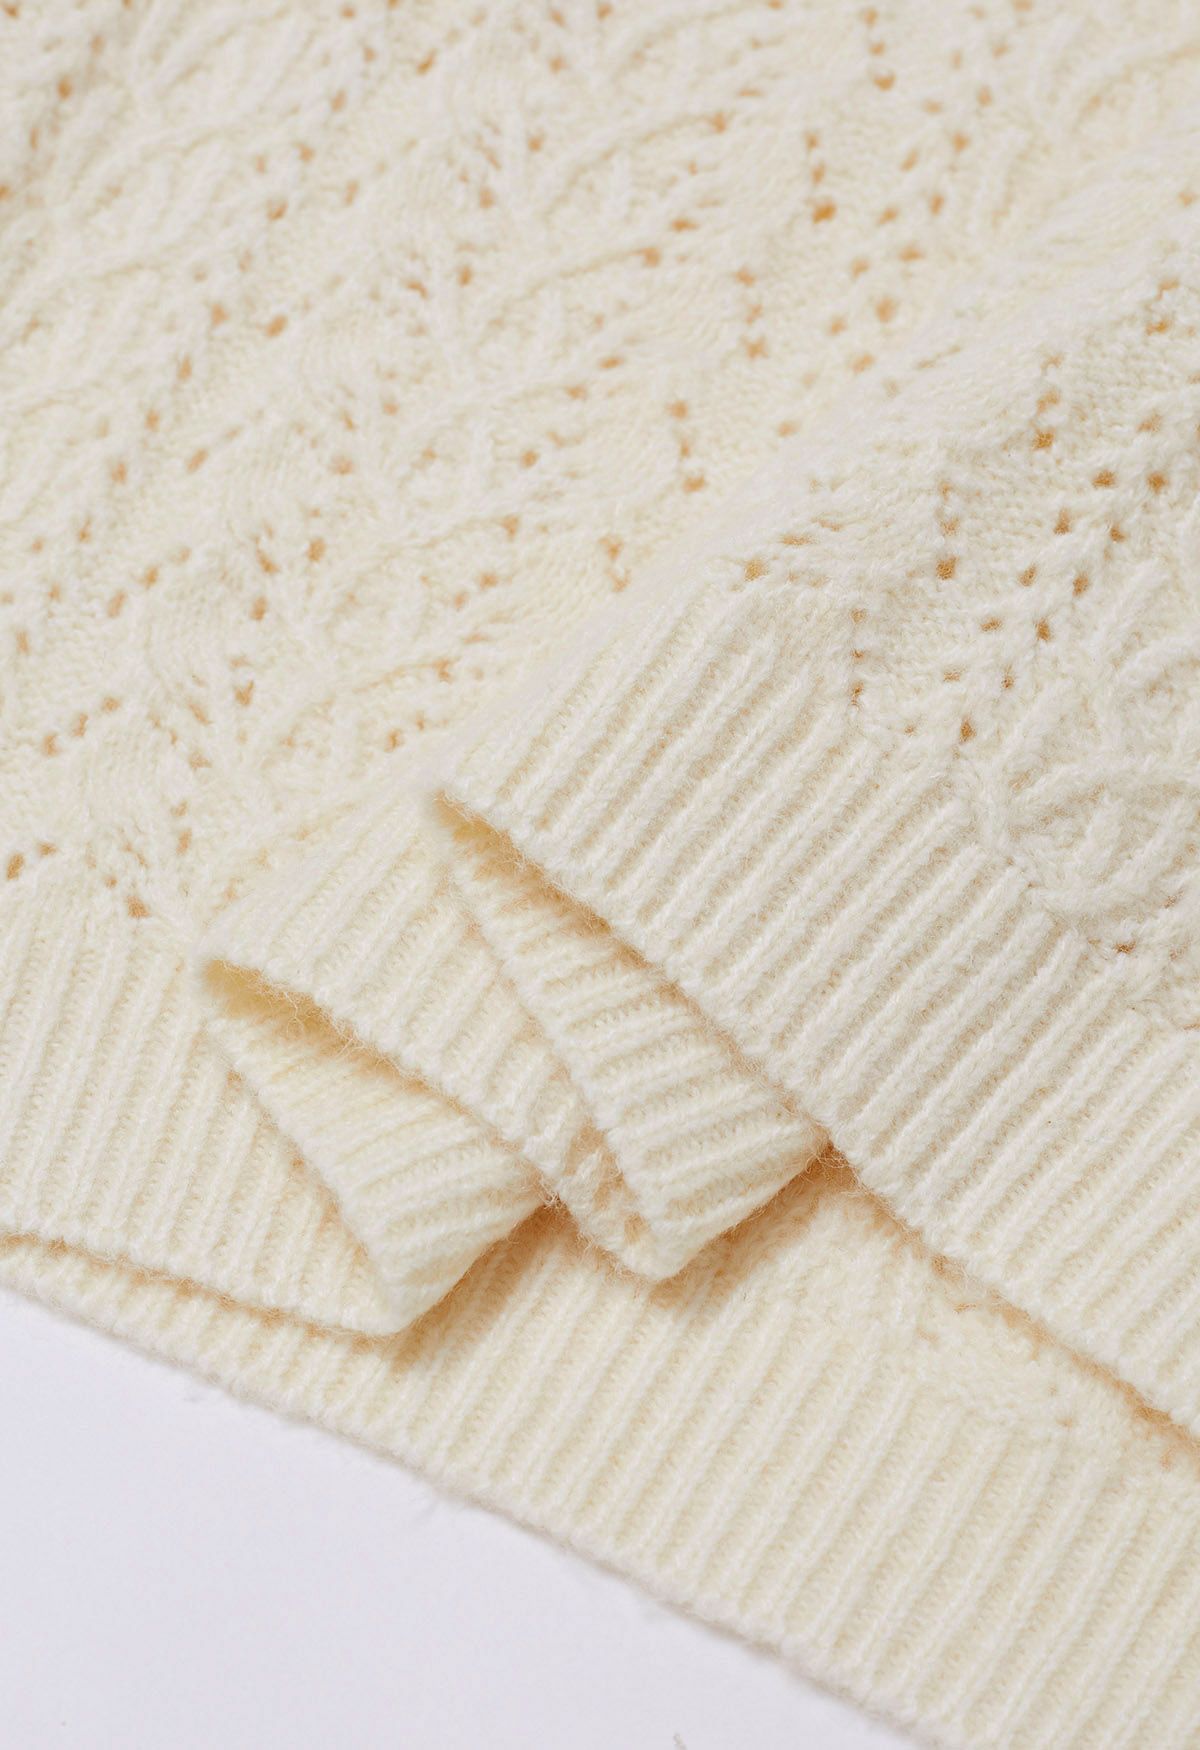 V-Neck Pointelle Knit Sweater in Cream